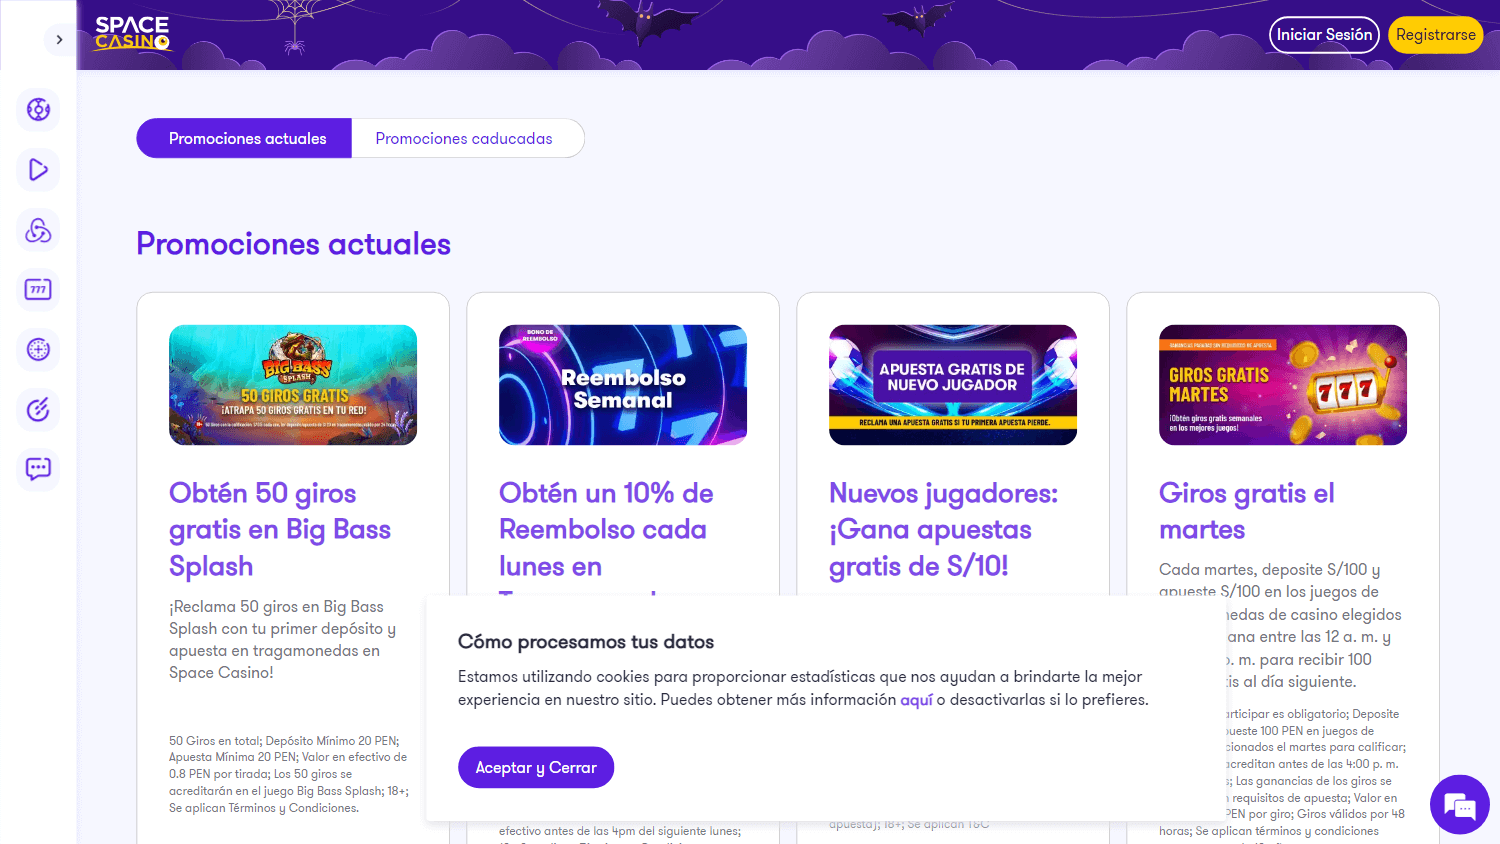 space_casino_promotions_desktop